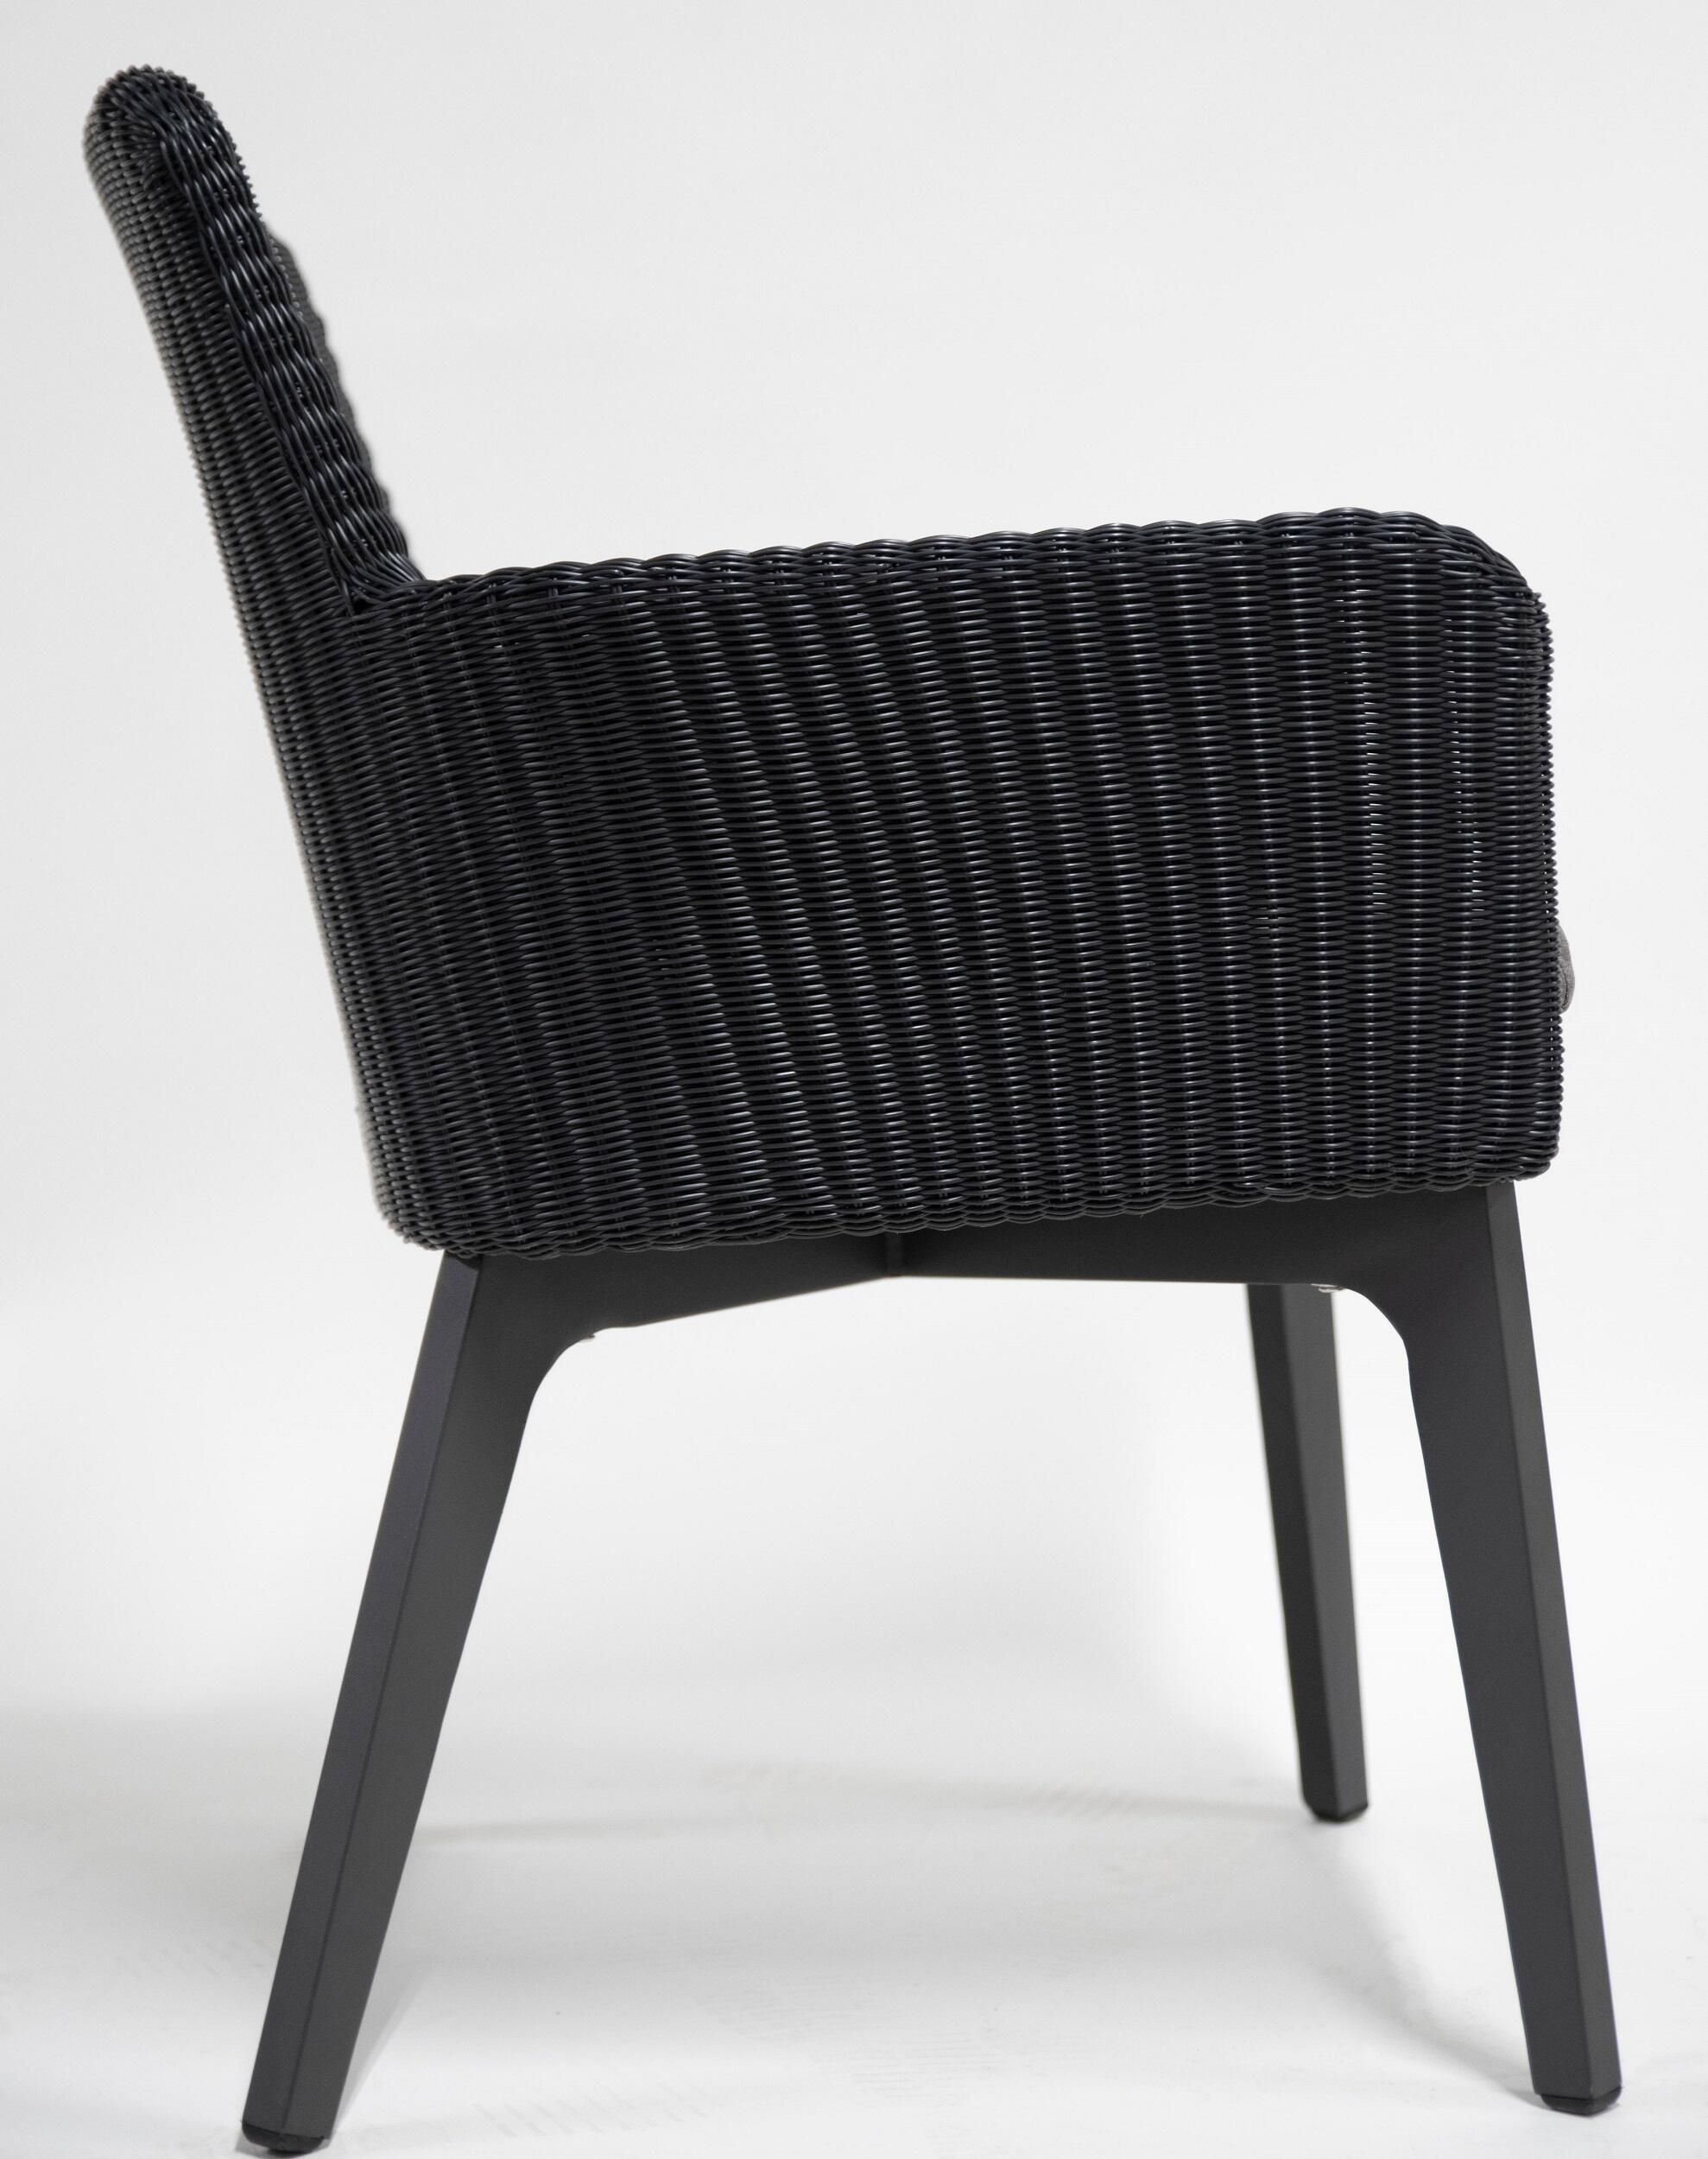 dark grey rattan patio garden dining chair aluminium legs